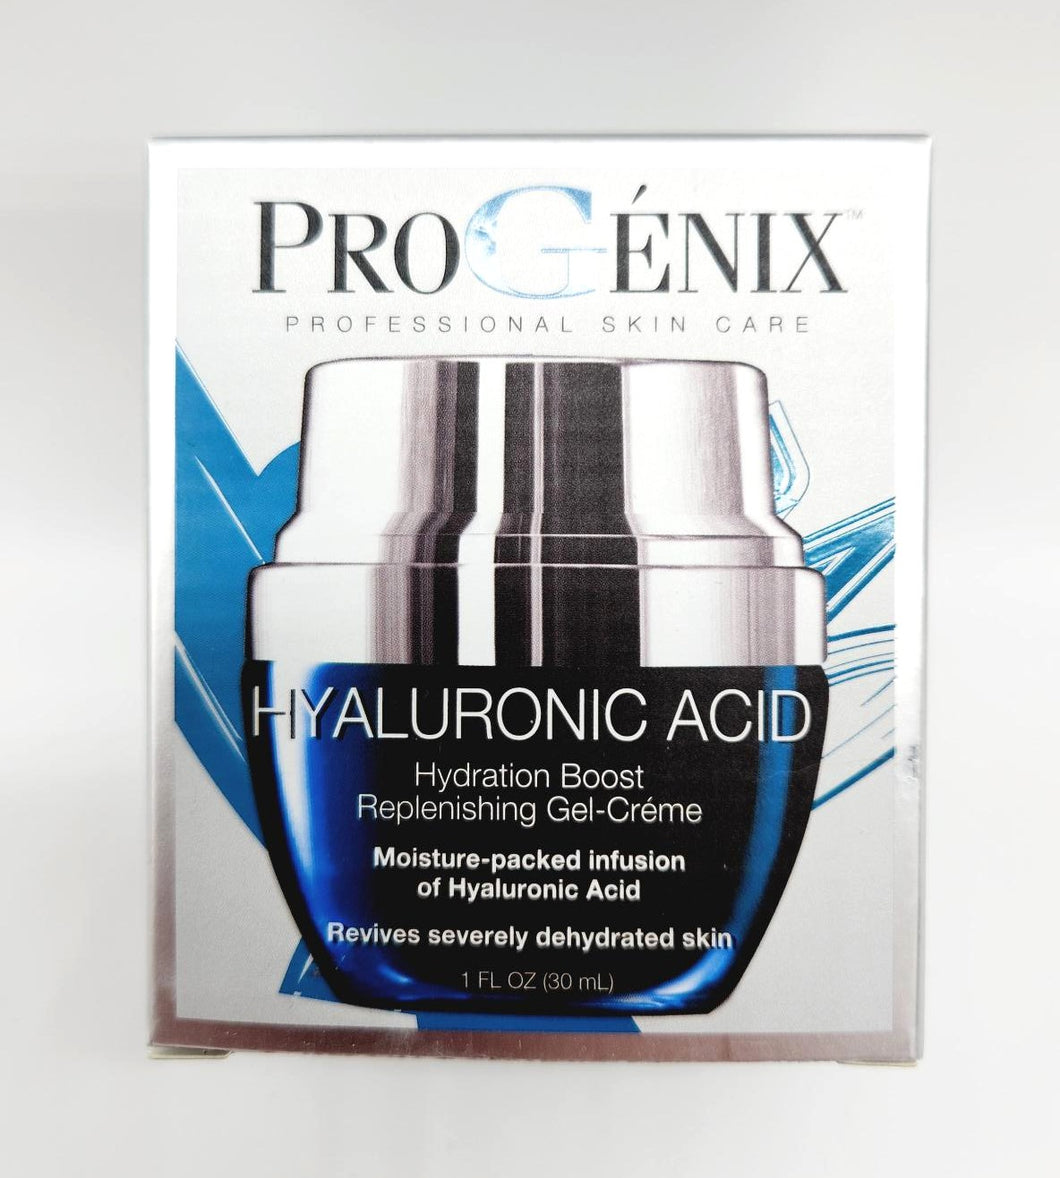 PROGENIX Moisture-Packed infusion Hyaluronic Acid gel creme